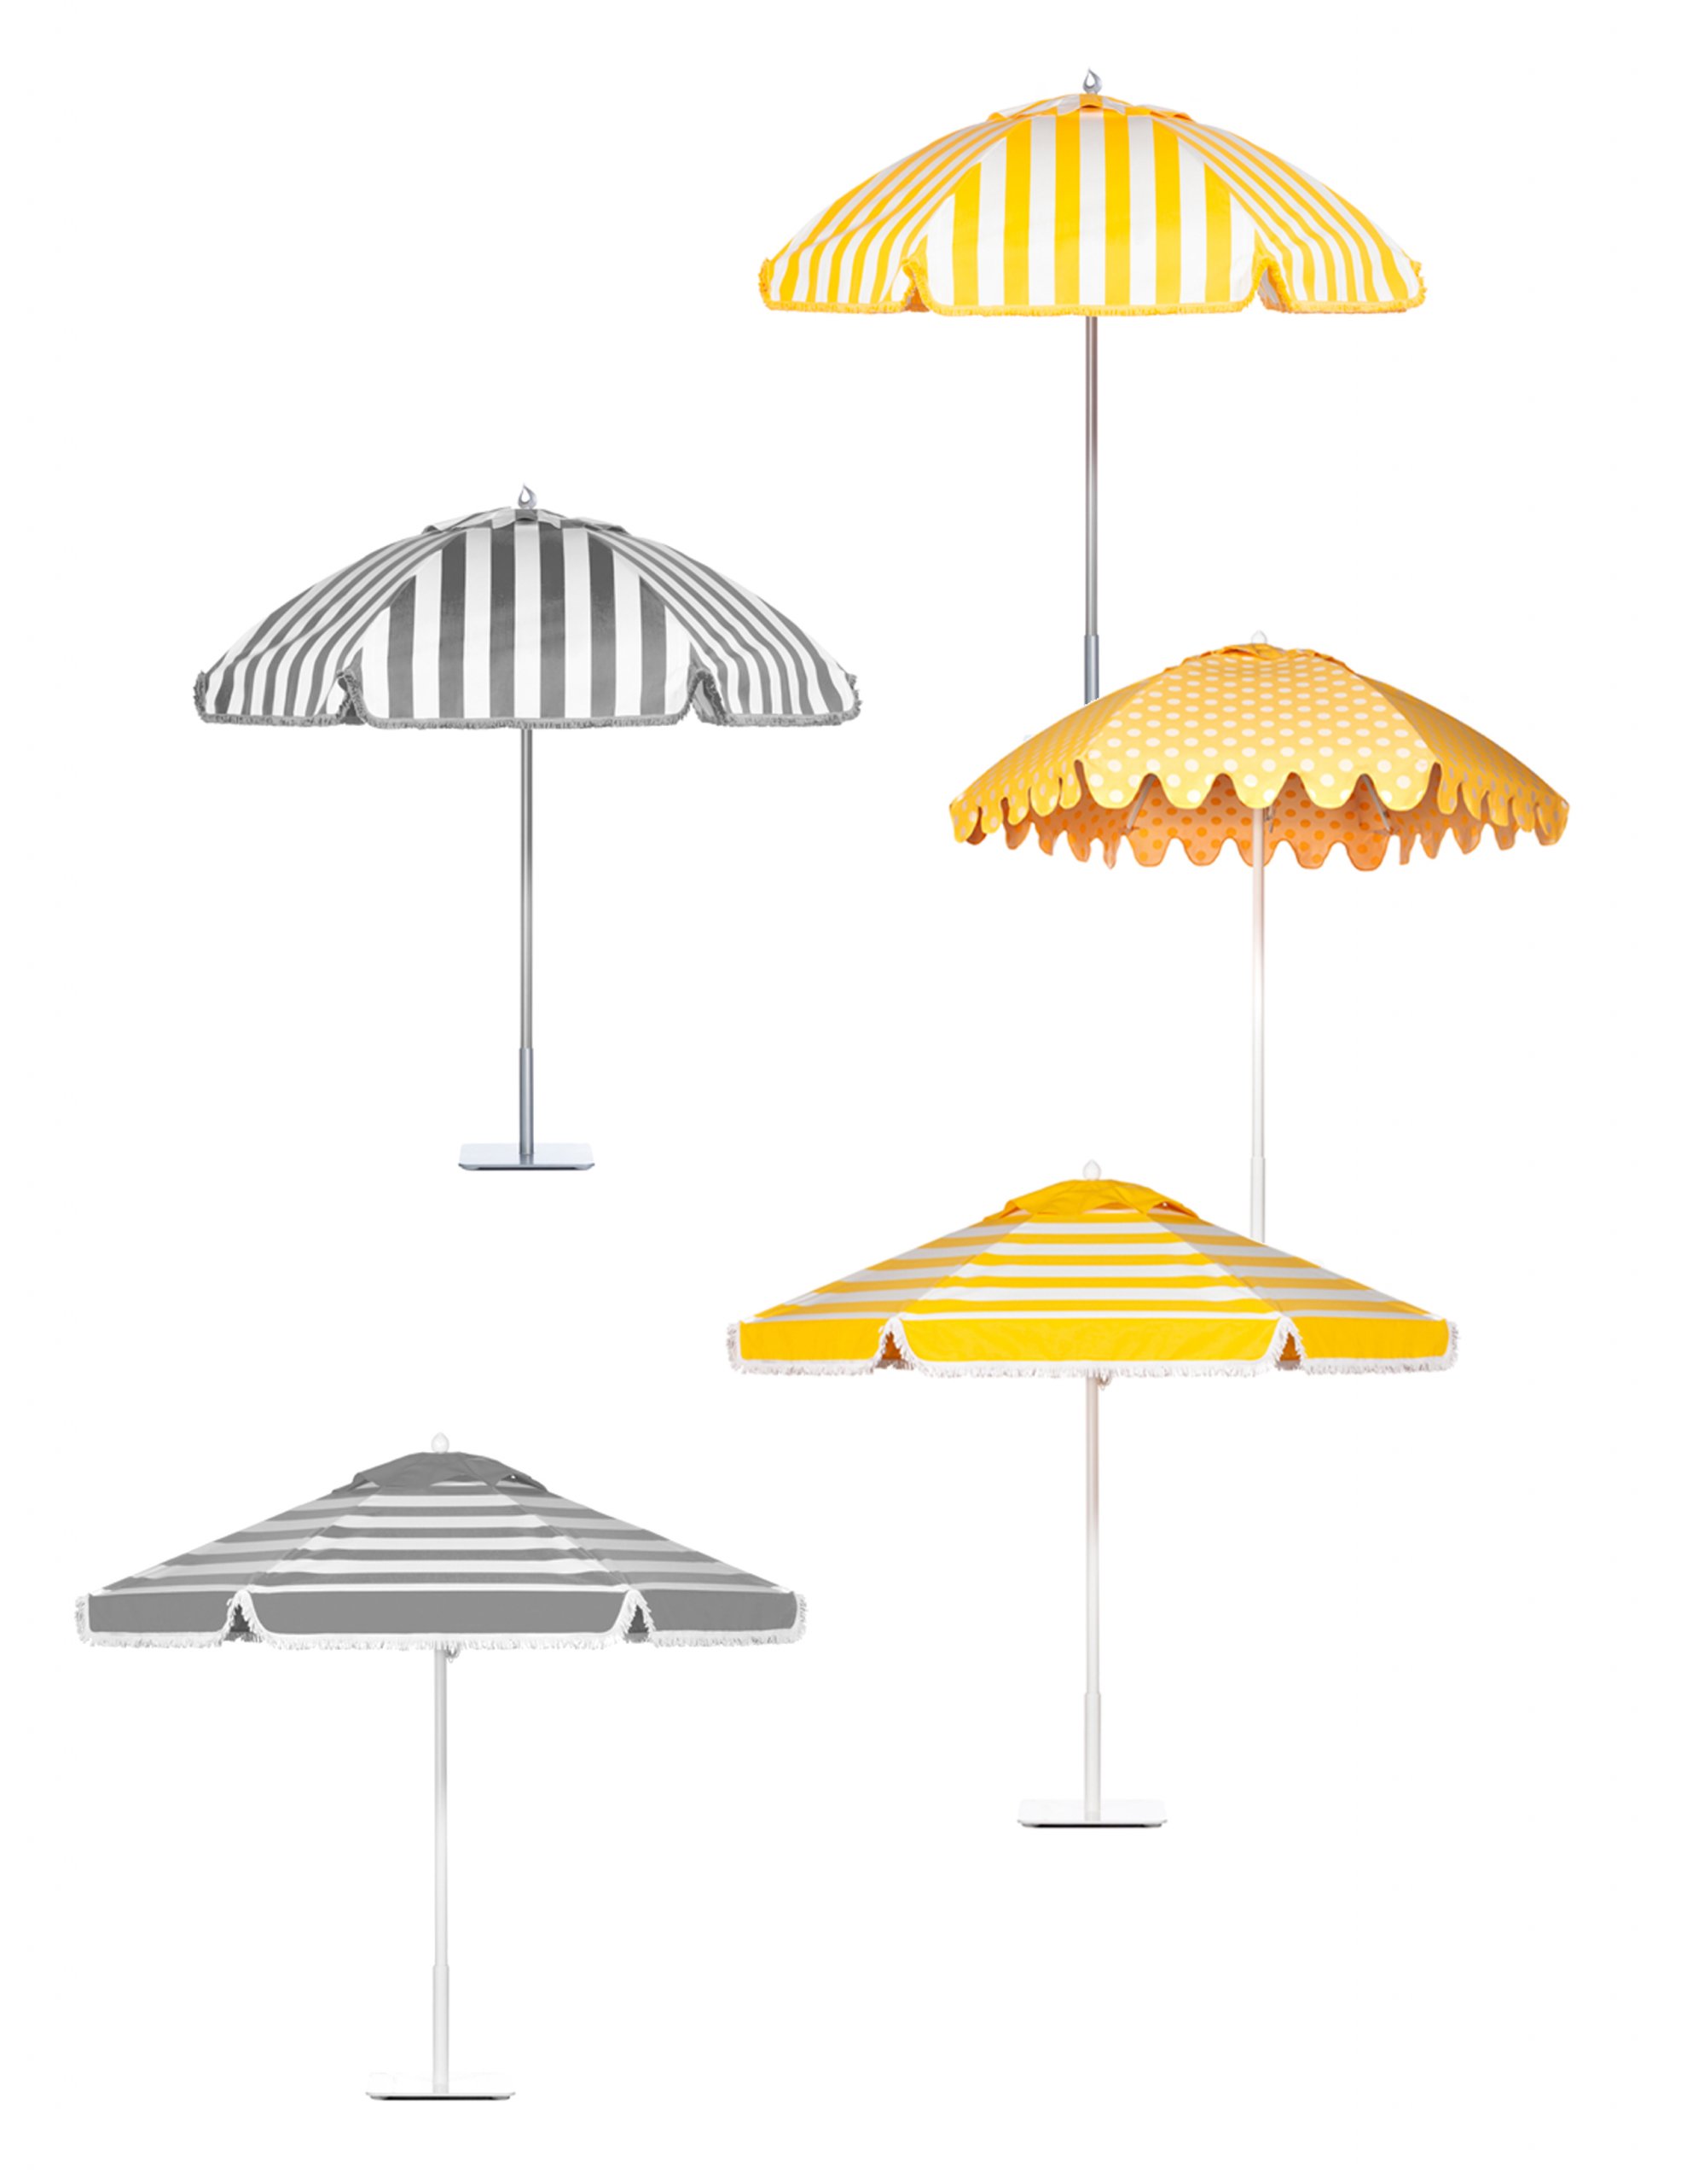 Studio shots of umbrellas